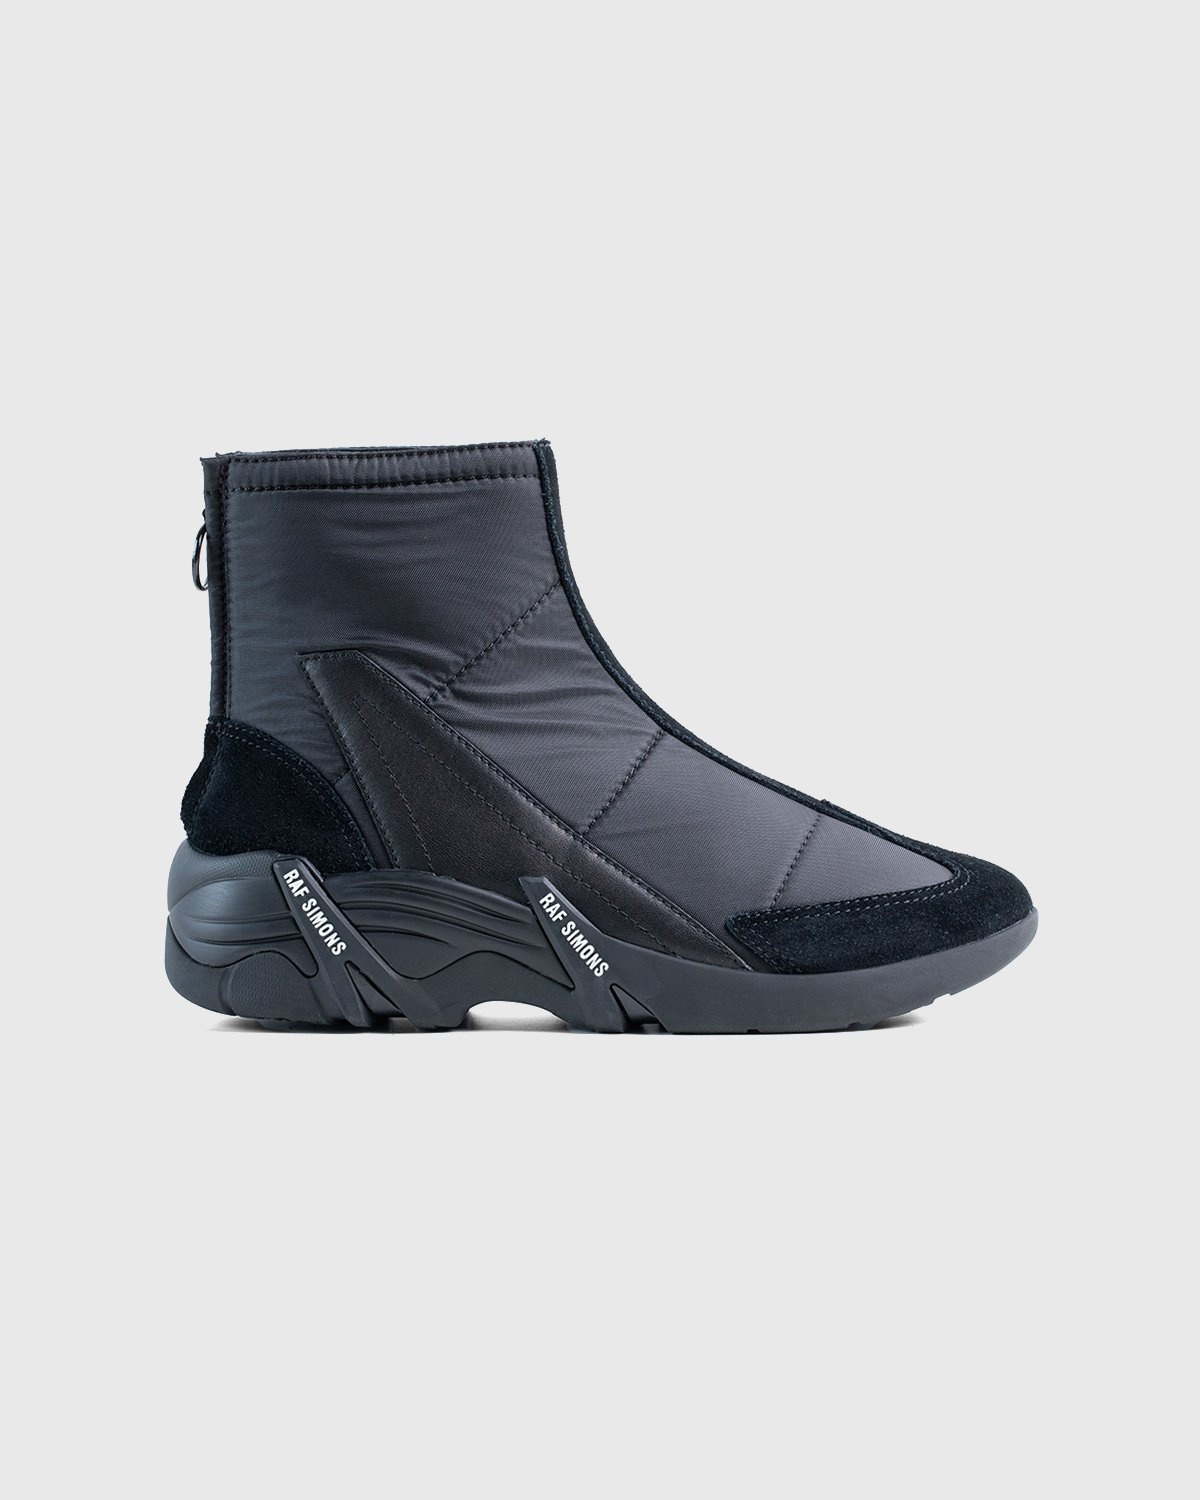 Raf Simons – Cylon 22 Black - High Top Sneakers - Black - Image 1